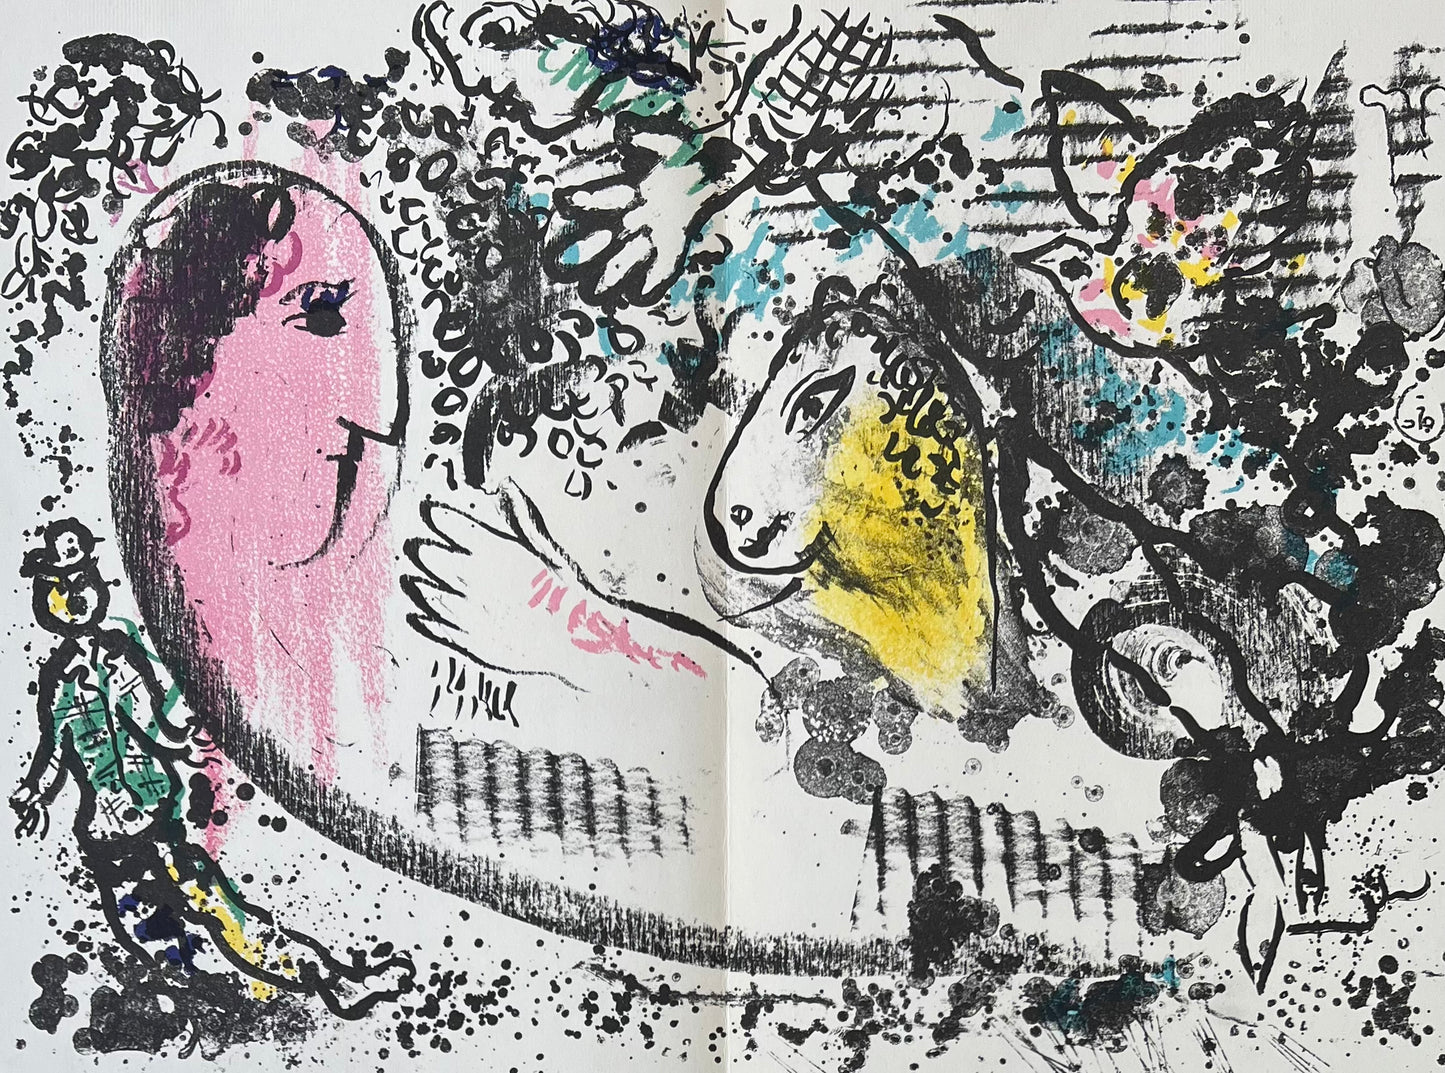 Marc Chagall. "The dream", 1969